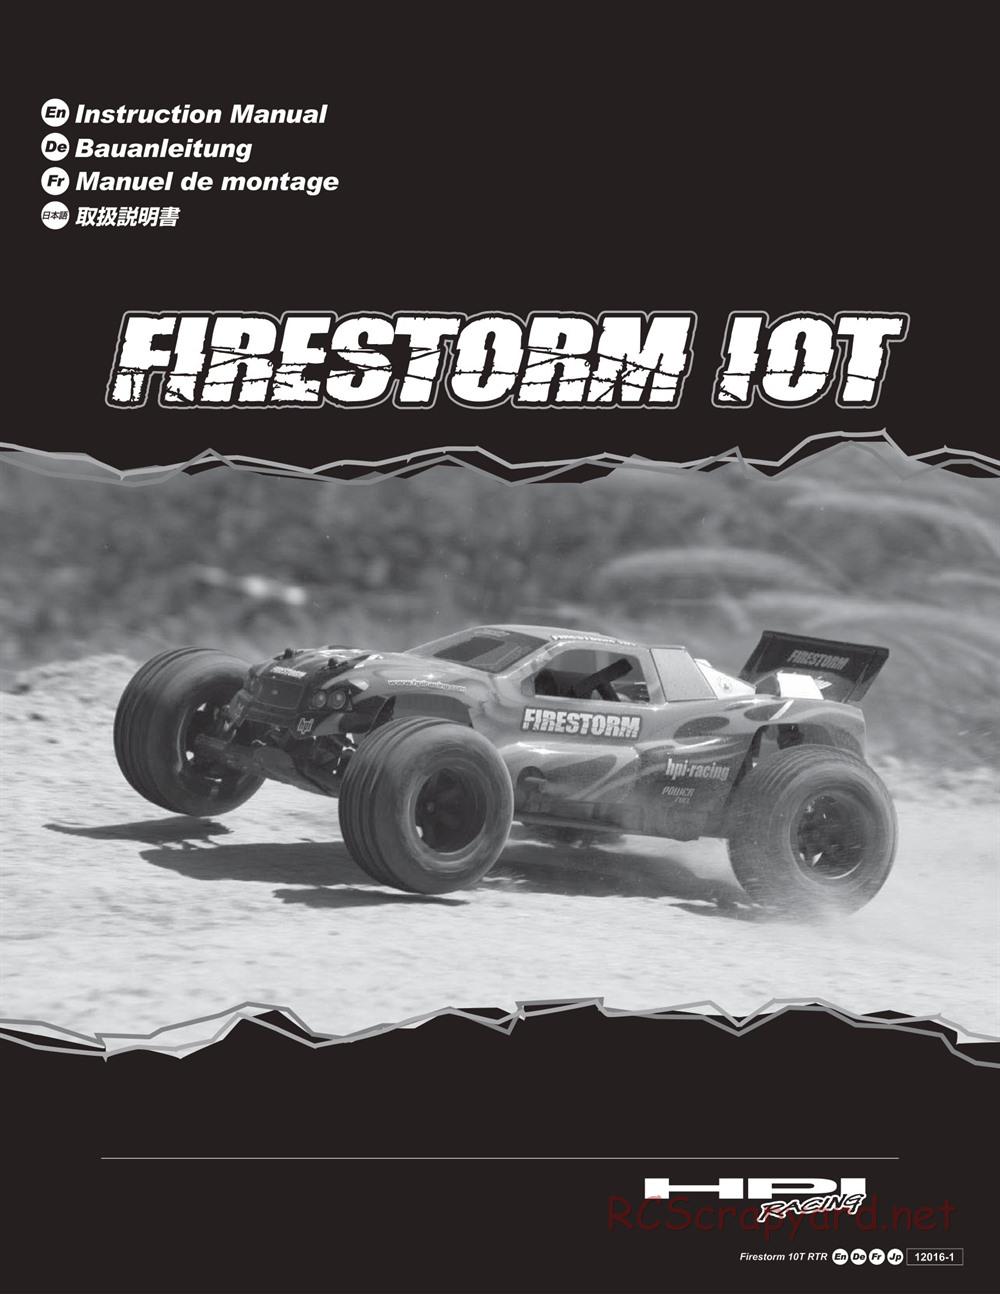 HPI - Firestorm 10T - Manual - Page 1